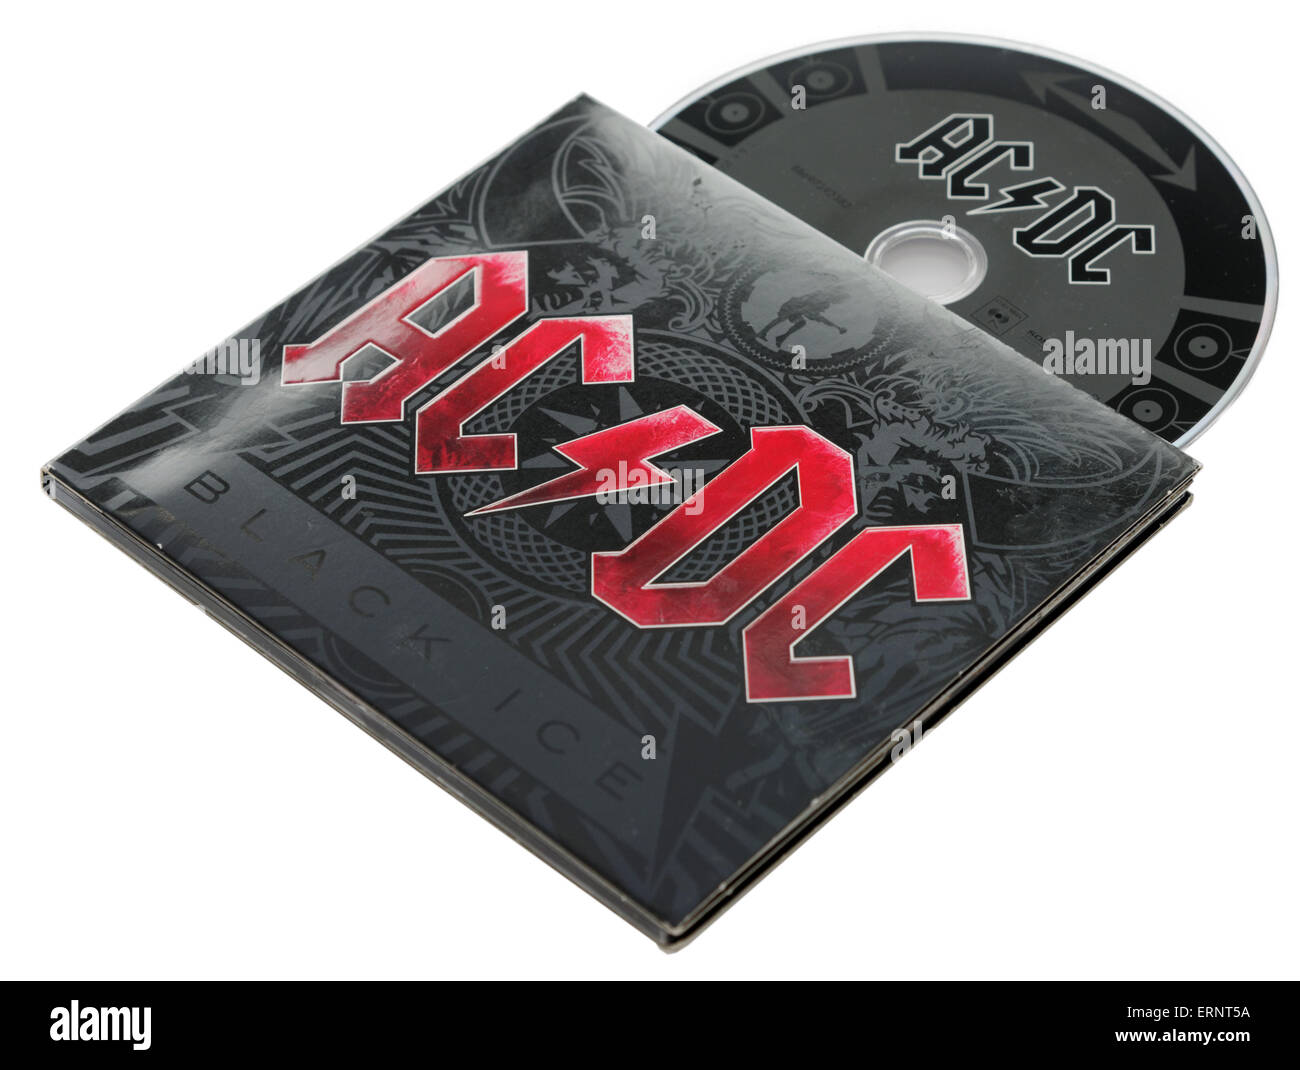 AC/DC Black Ice CD Stockfotografie - Alamy